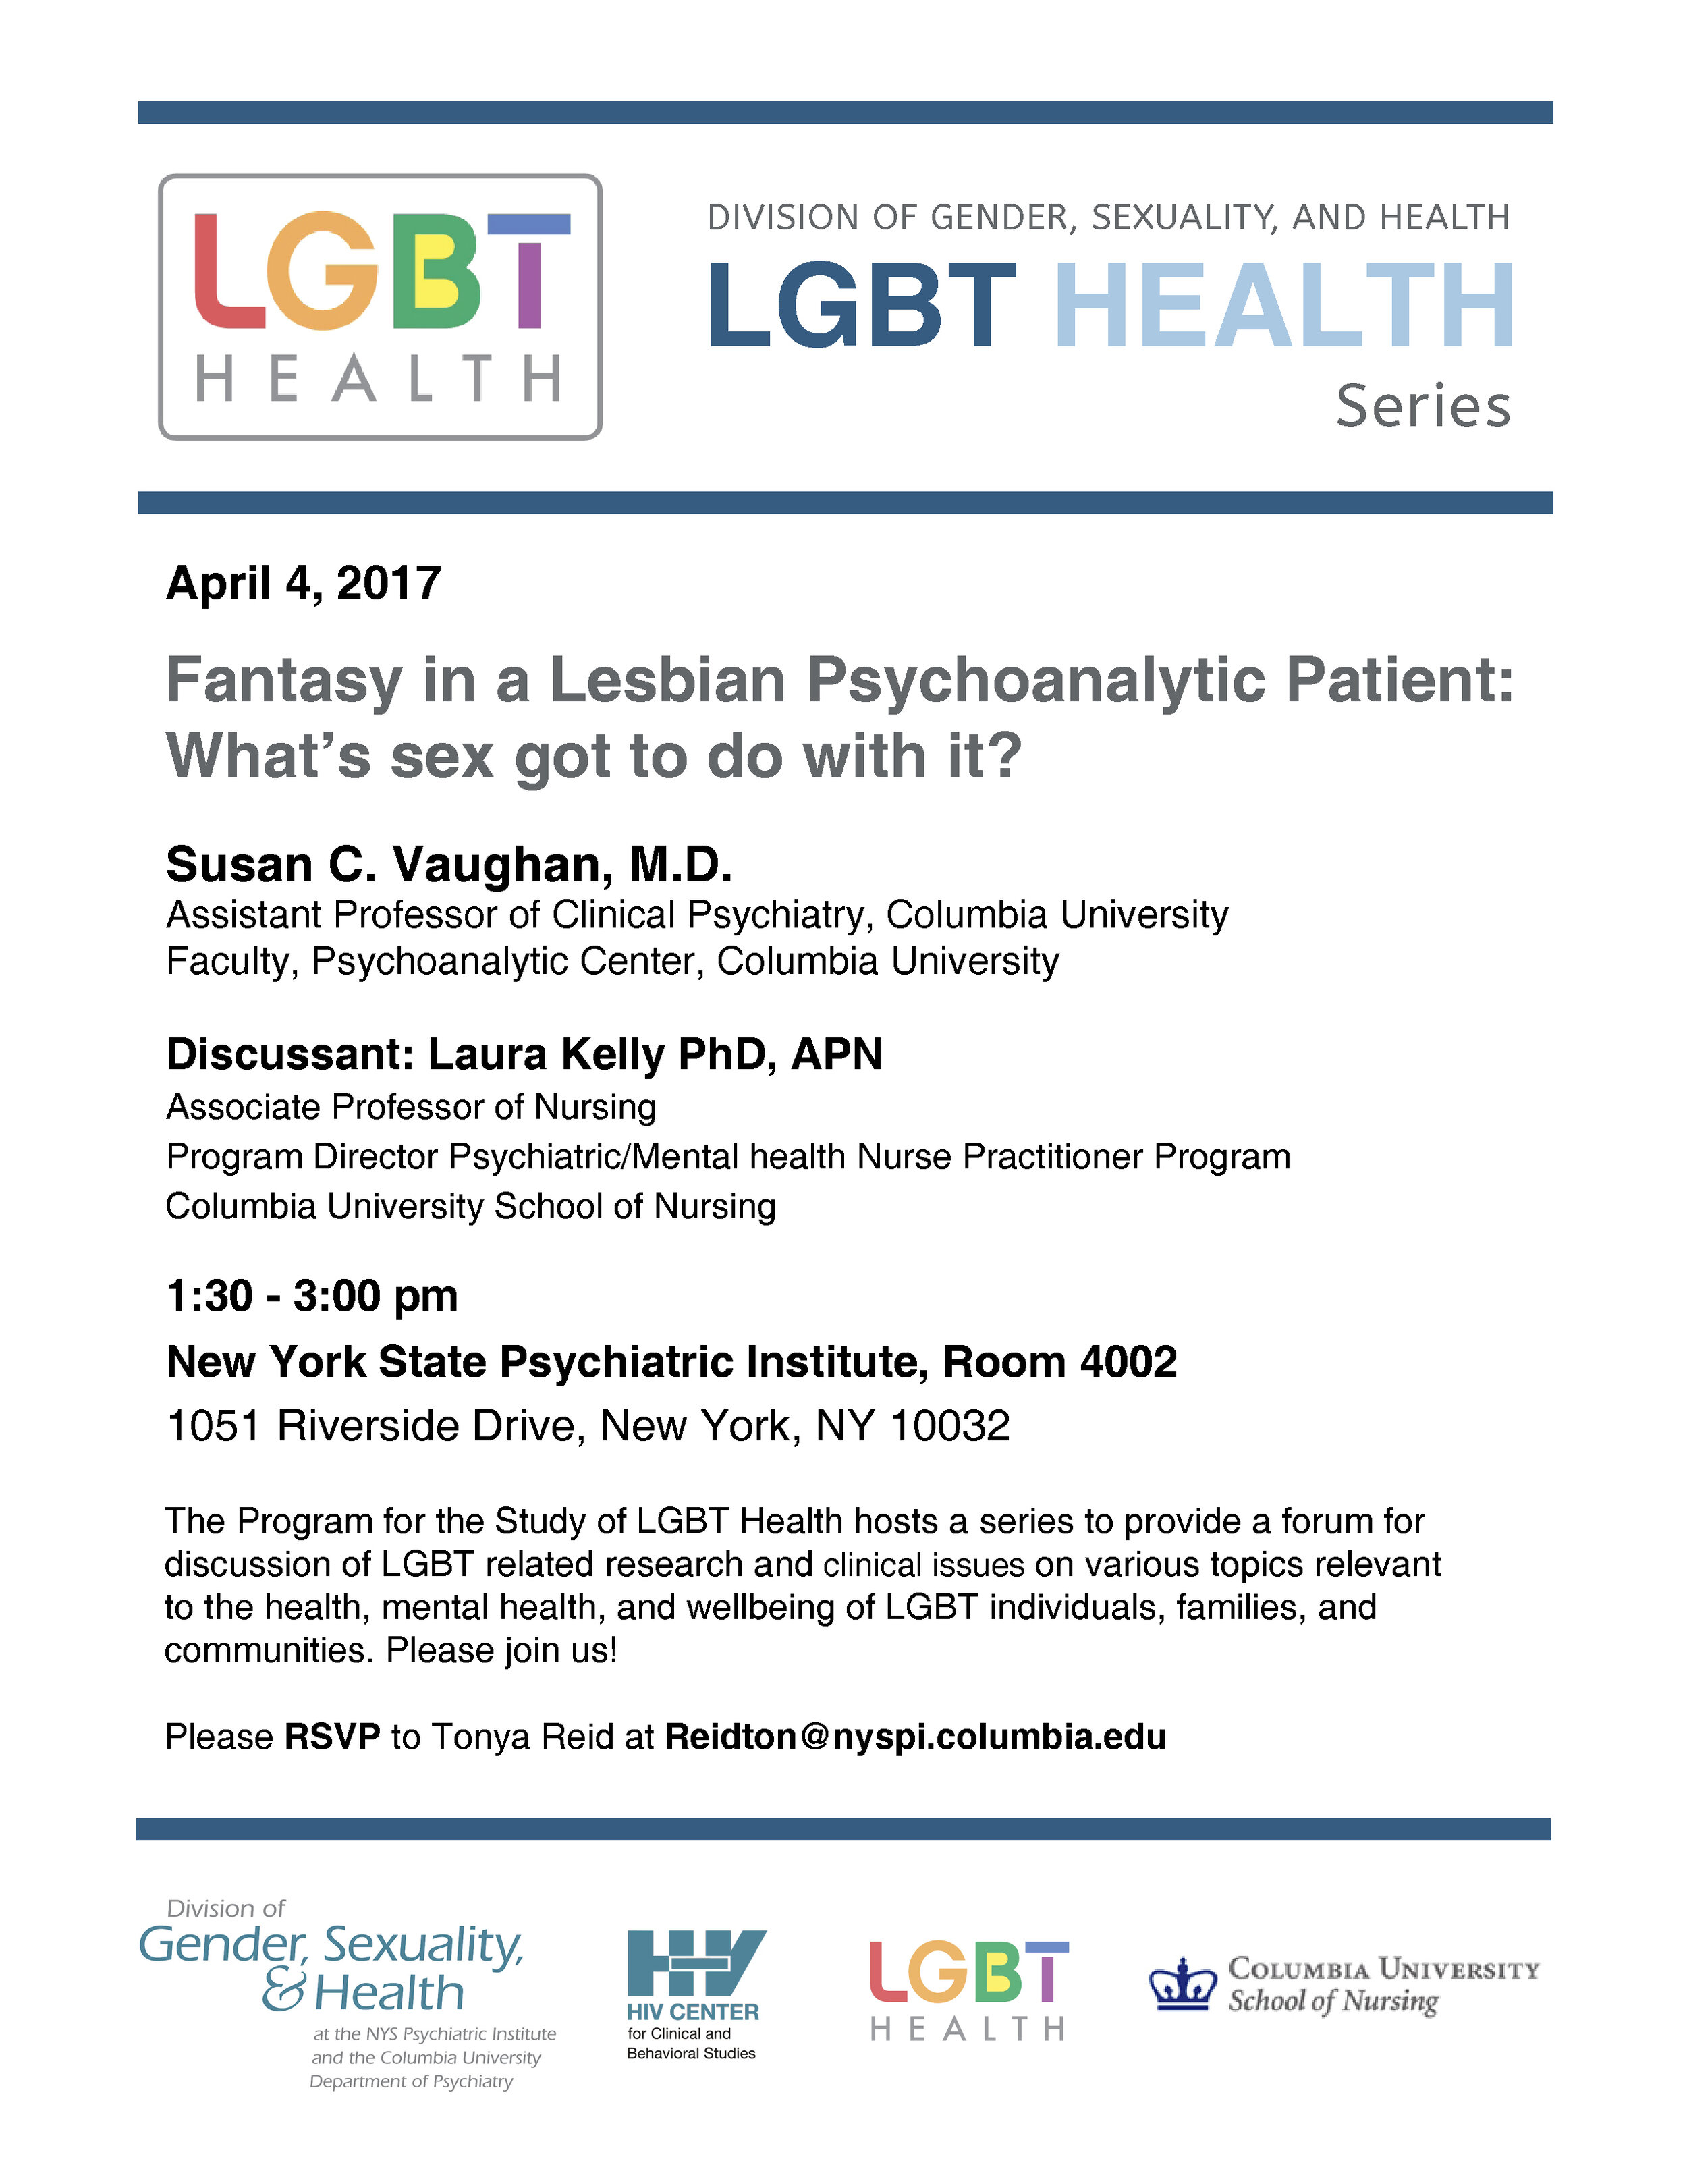 LGBT Health Series April 4 2017.jpg